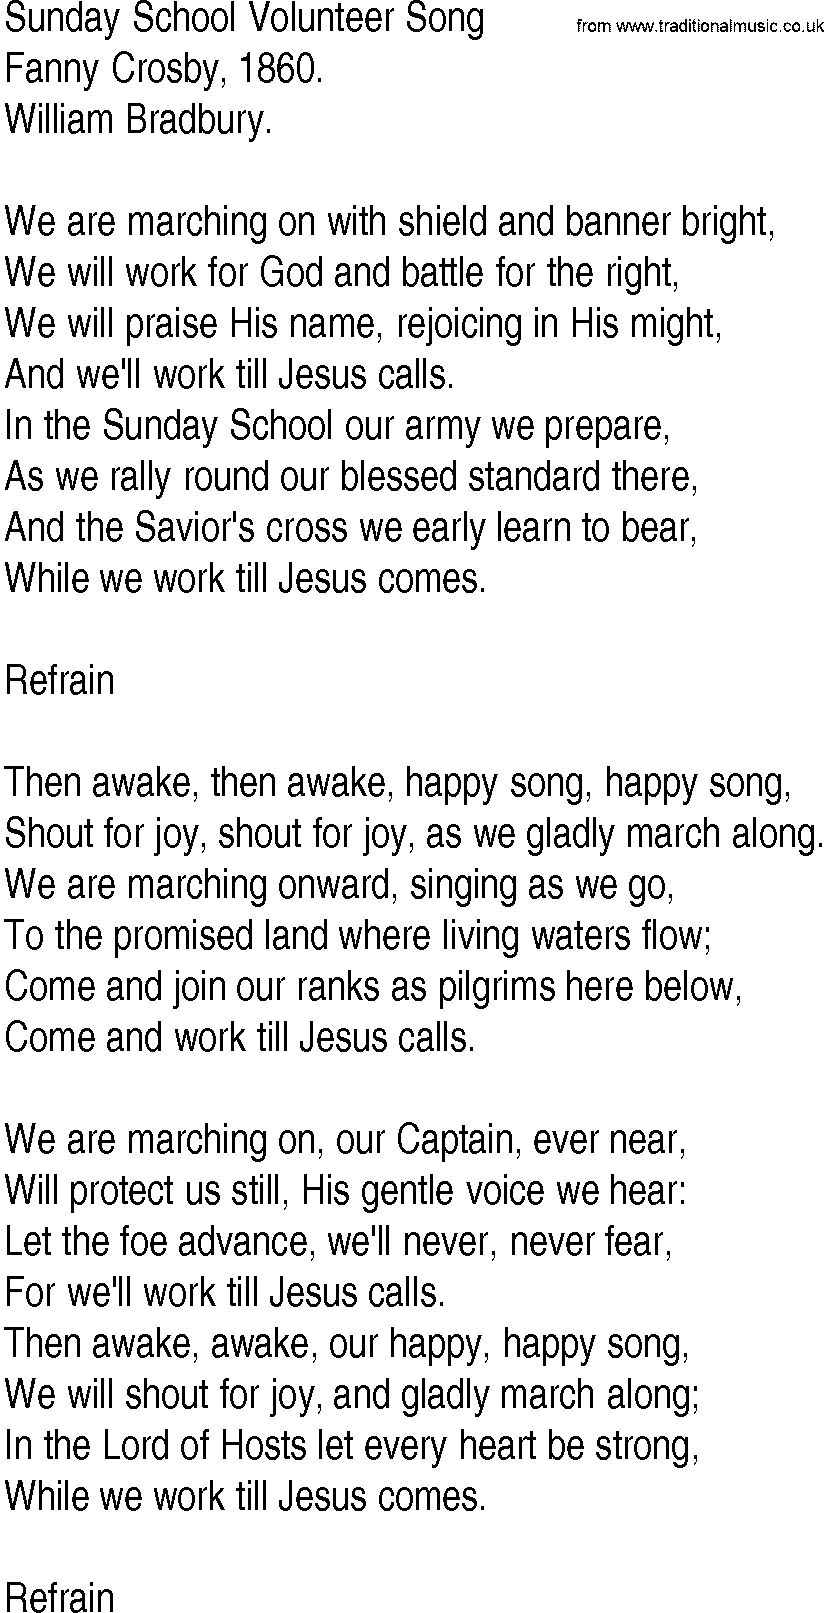 Hymn and Gospel Song: Sunday School Volunteer Song by Fanny Crosby lyrics